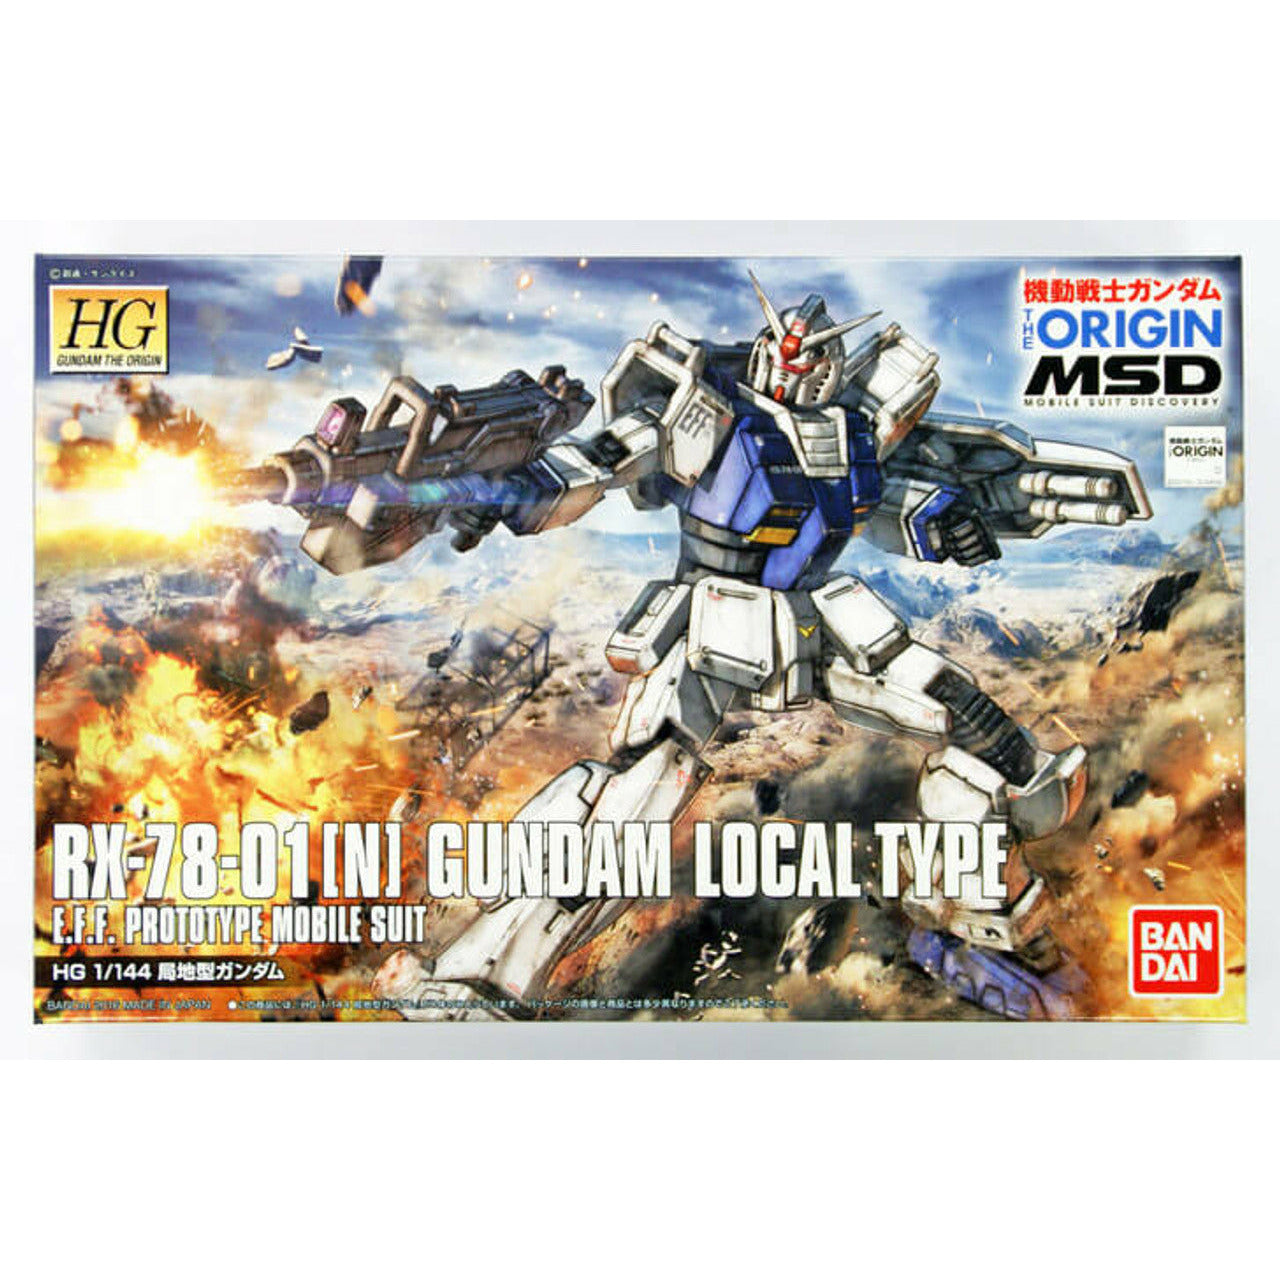 HG 1/144 The Origin #10 RX-78-01[N] Gundam Local Type #5055725 by Bandai